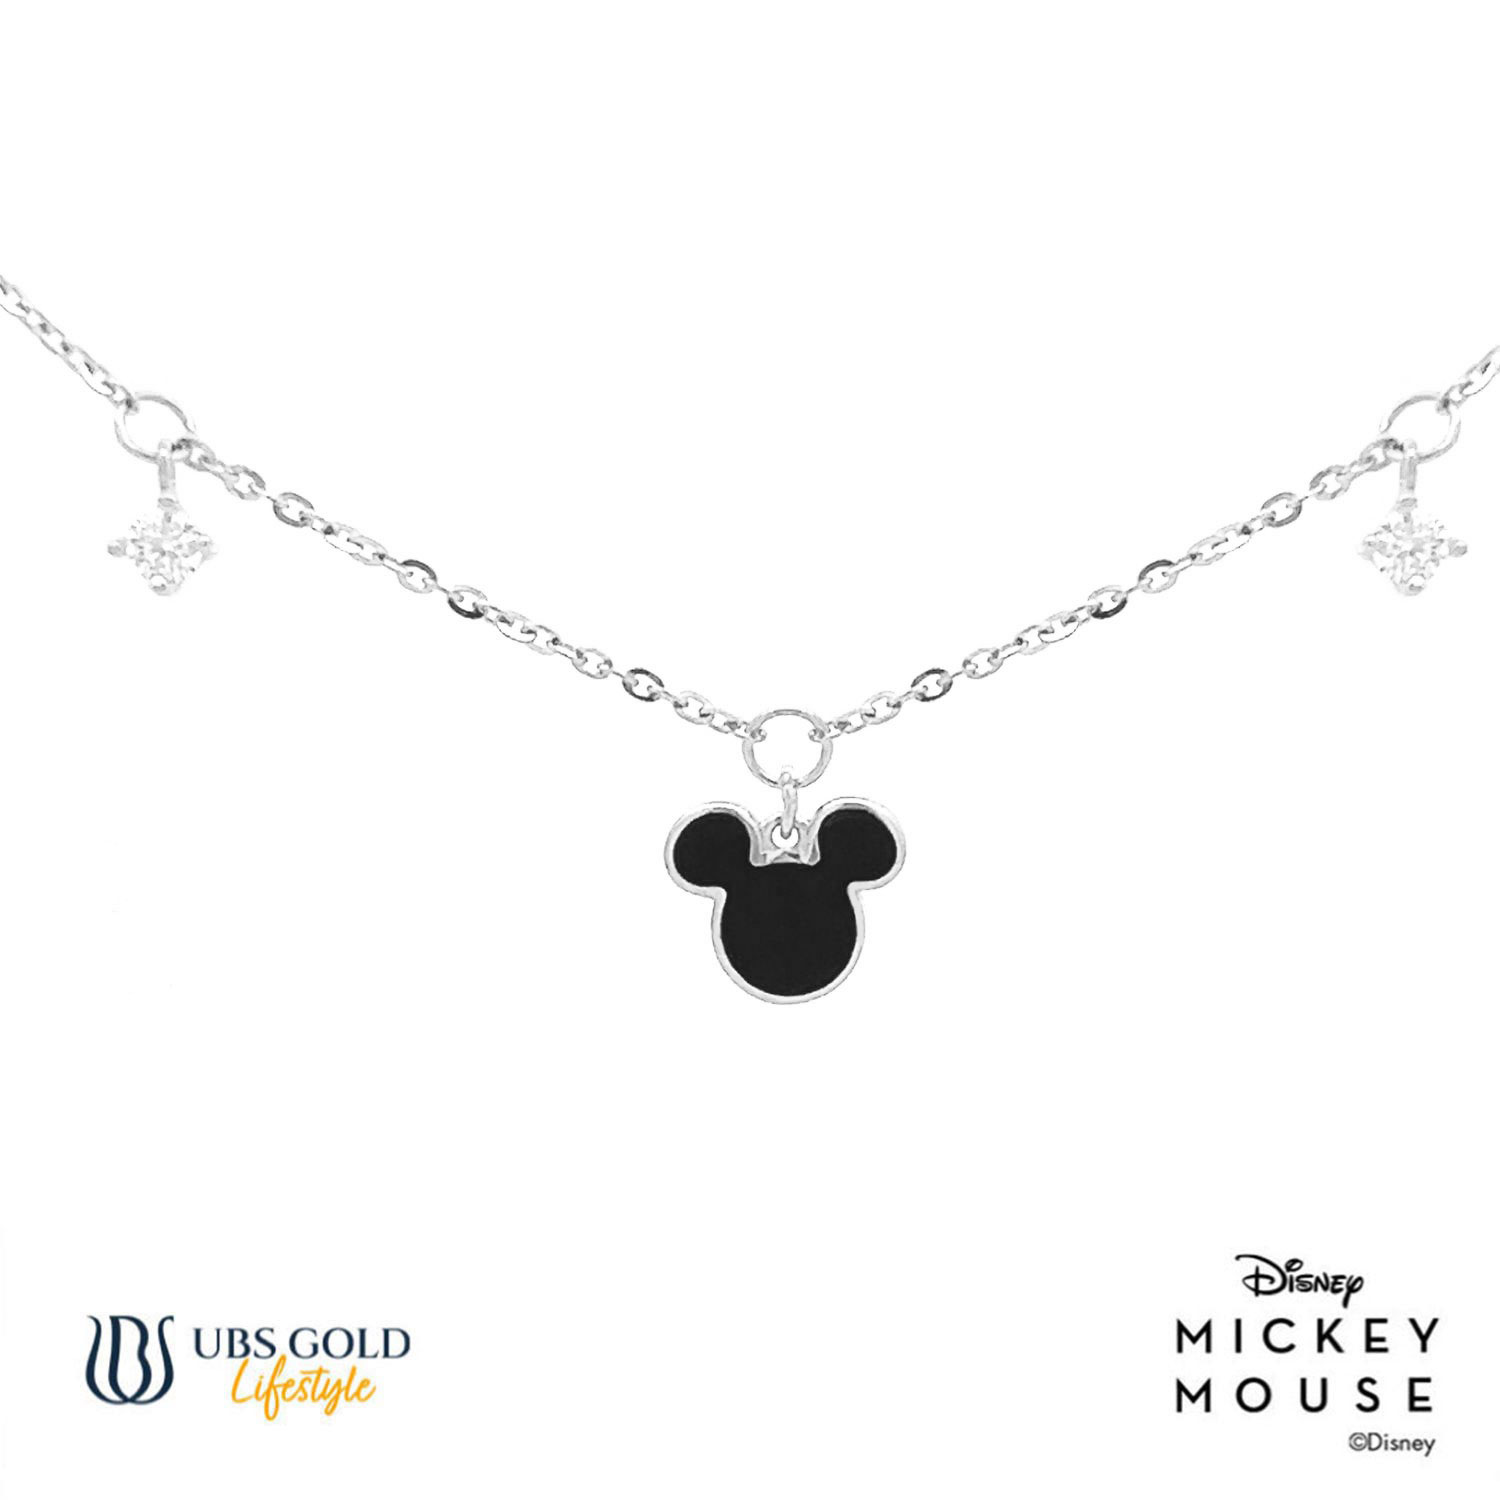 UBS Gold Kalung Emas Disney Mickey Mouse - Kky0477 - 17K